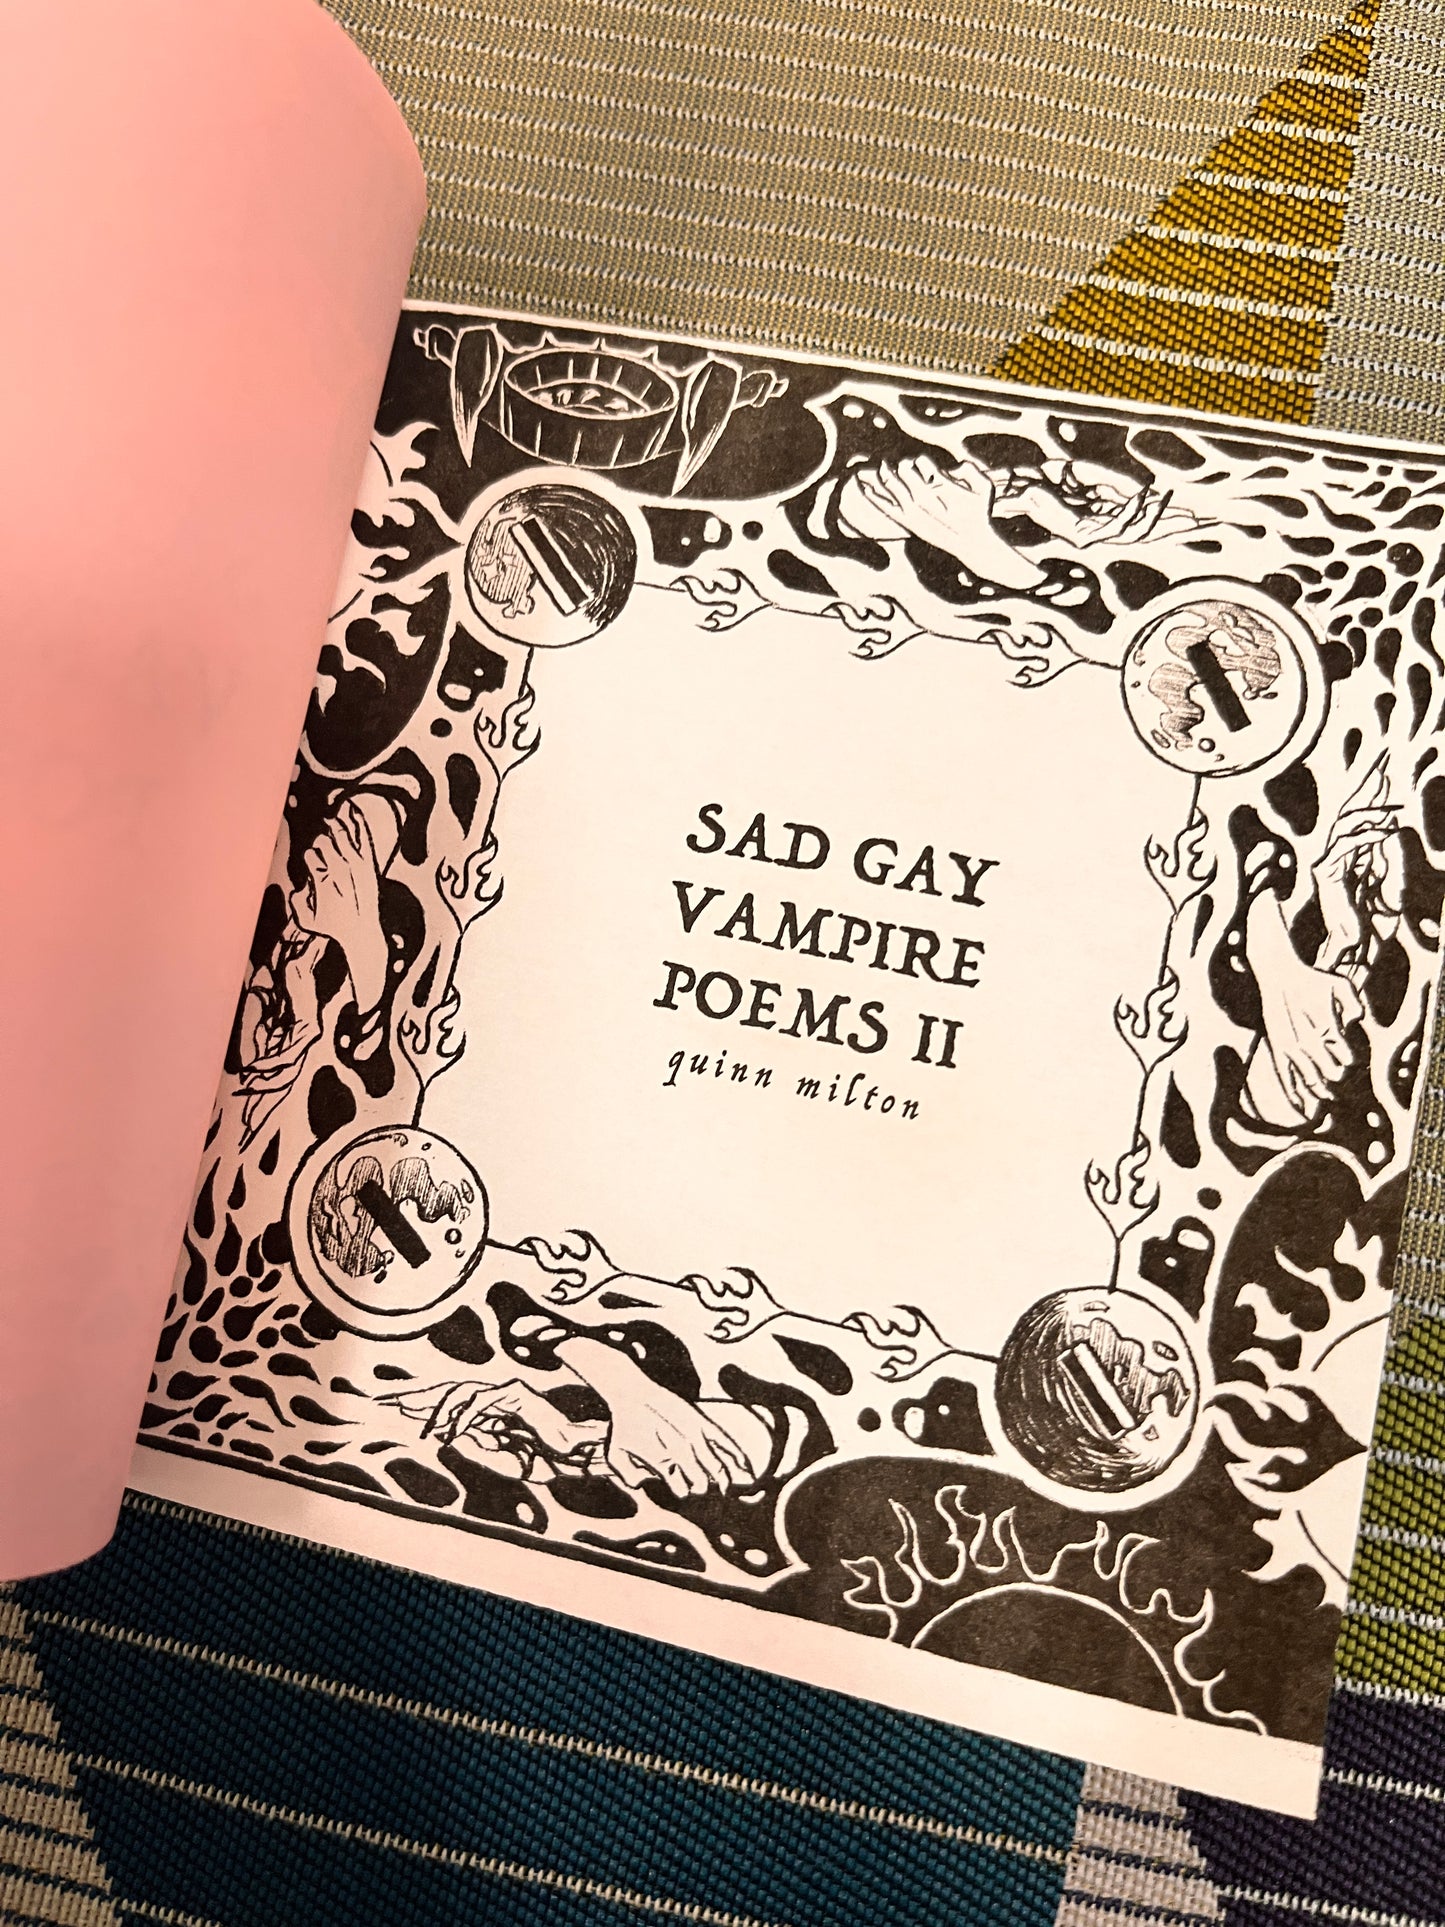 Sad Gay Vampire Poems Vol 2